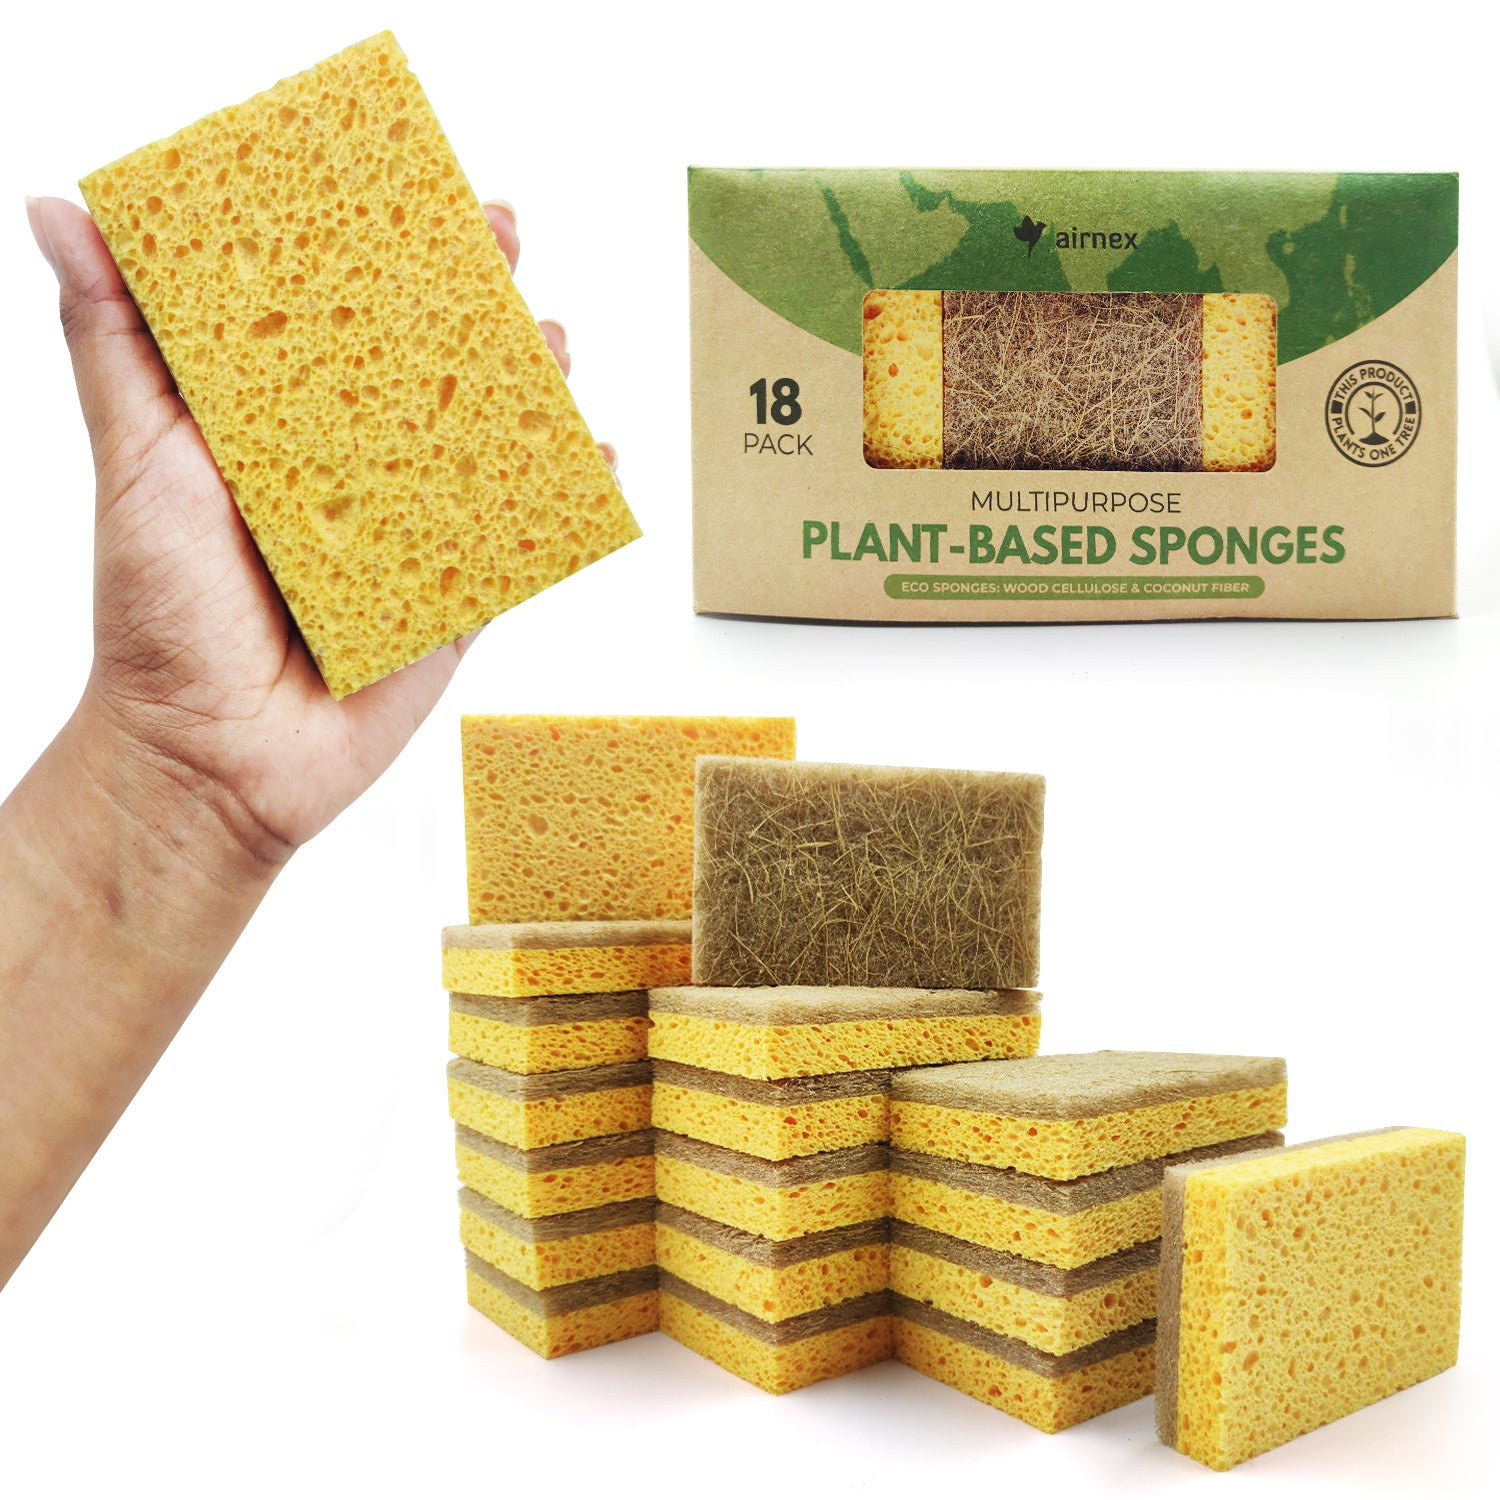 Kitchen Sponge Scrubber, Rectangular